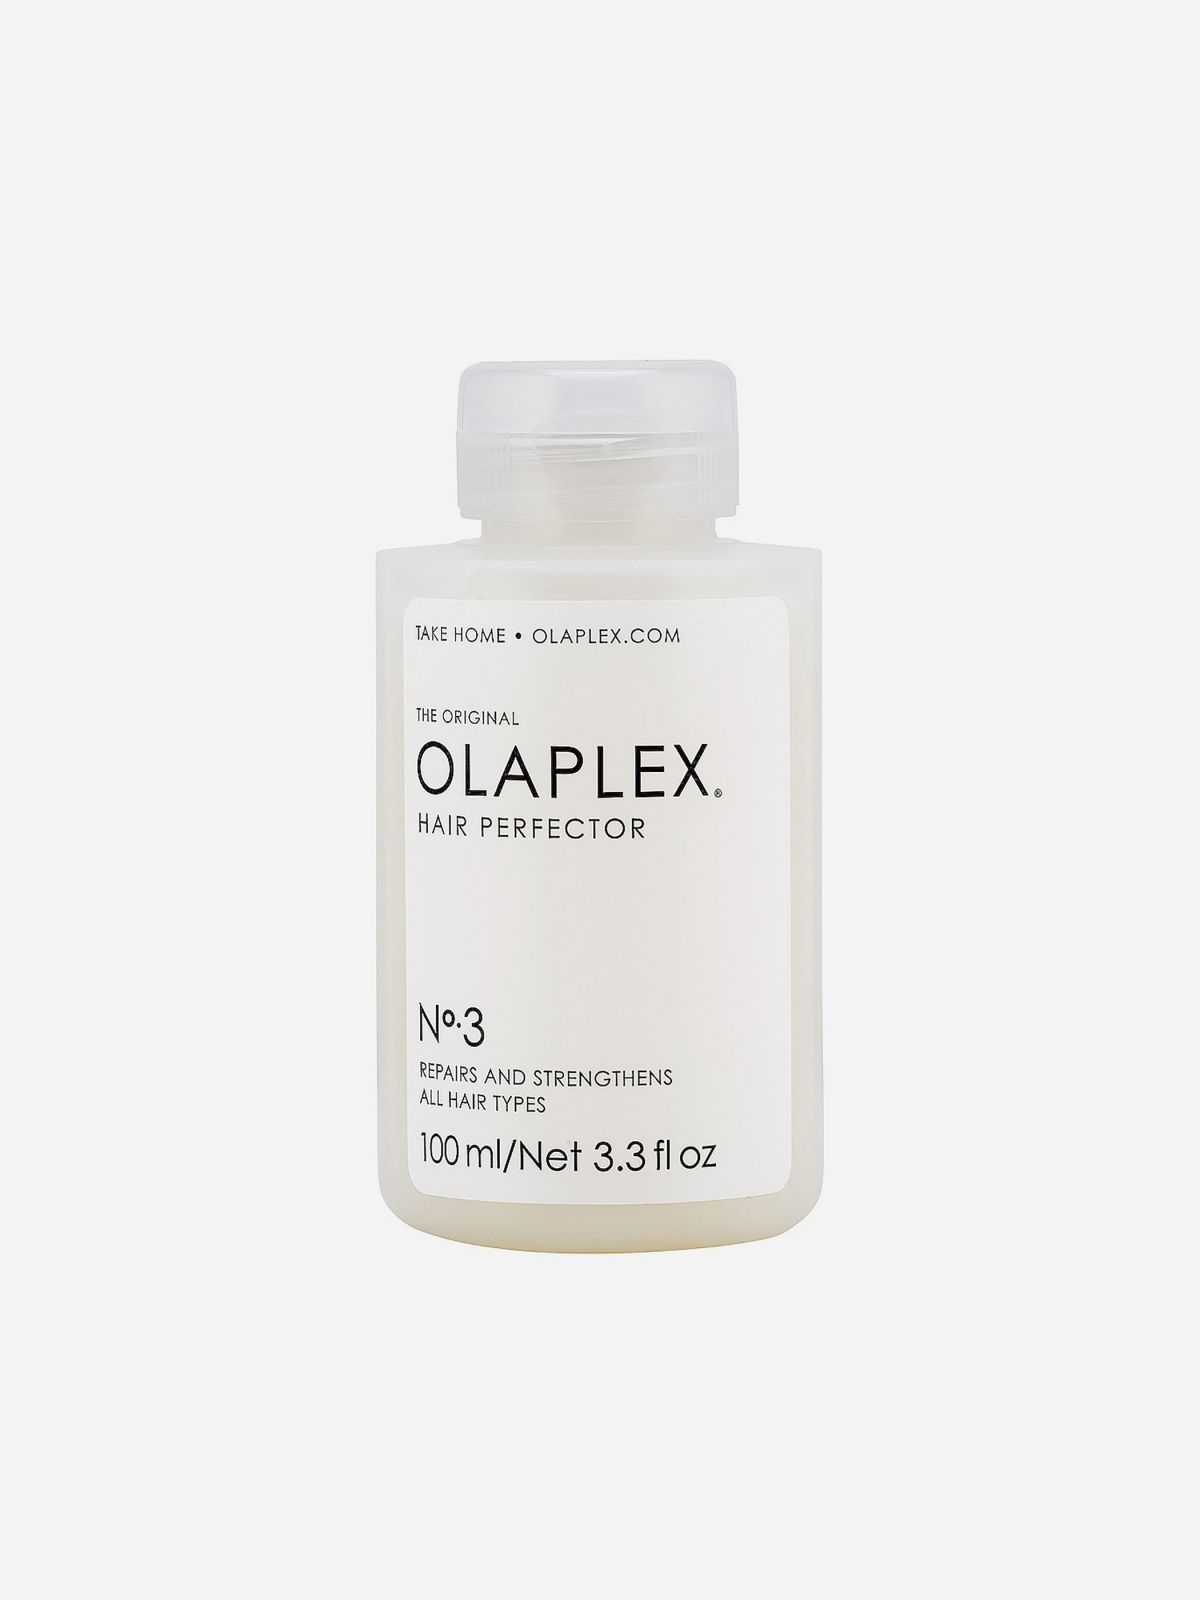  NO. 3 טיפול לשיקום שיער - 100 מ״ל של OLAPLEX